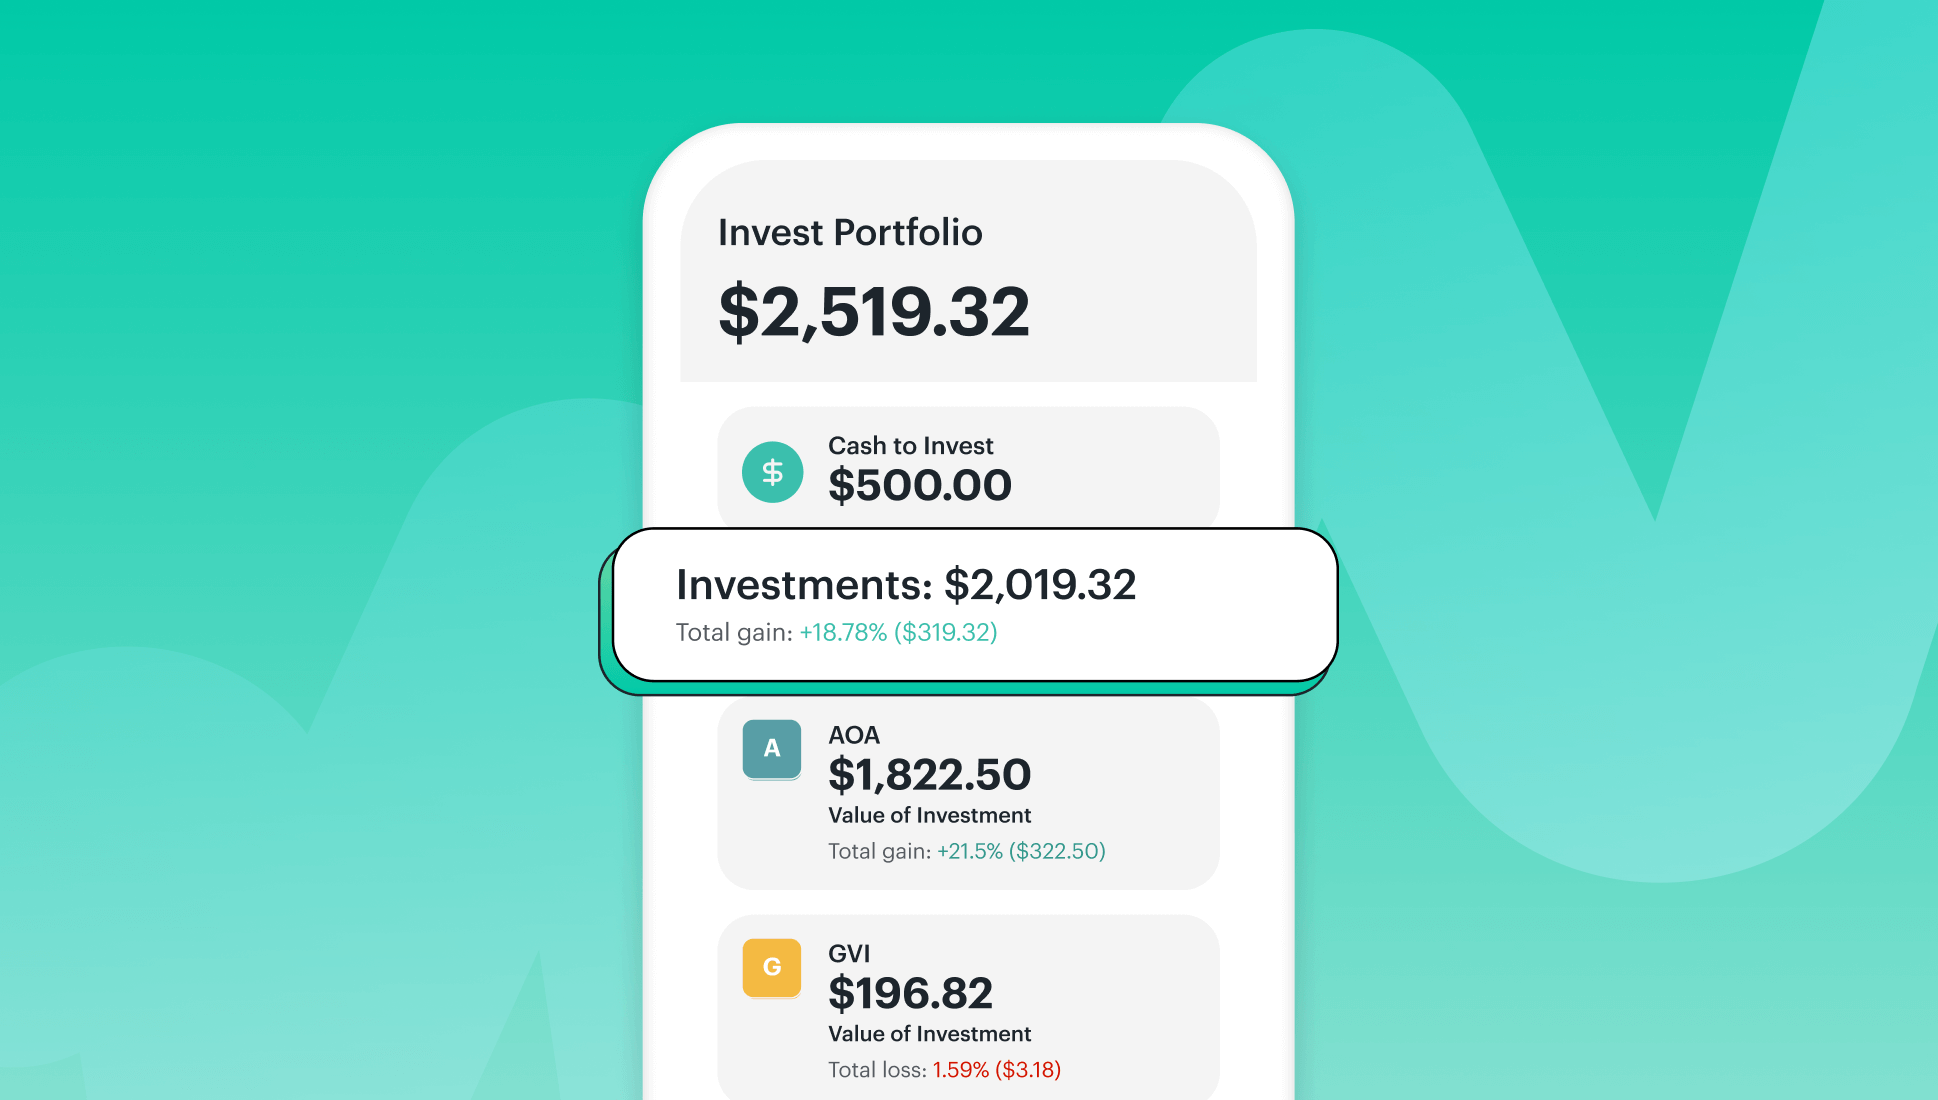 greenlight app showing investing portfolio